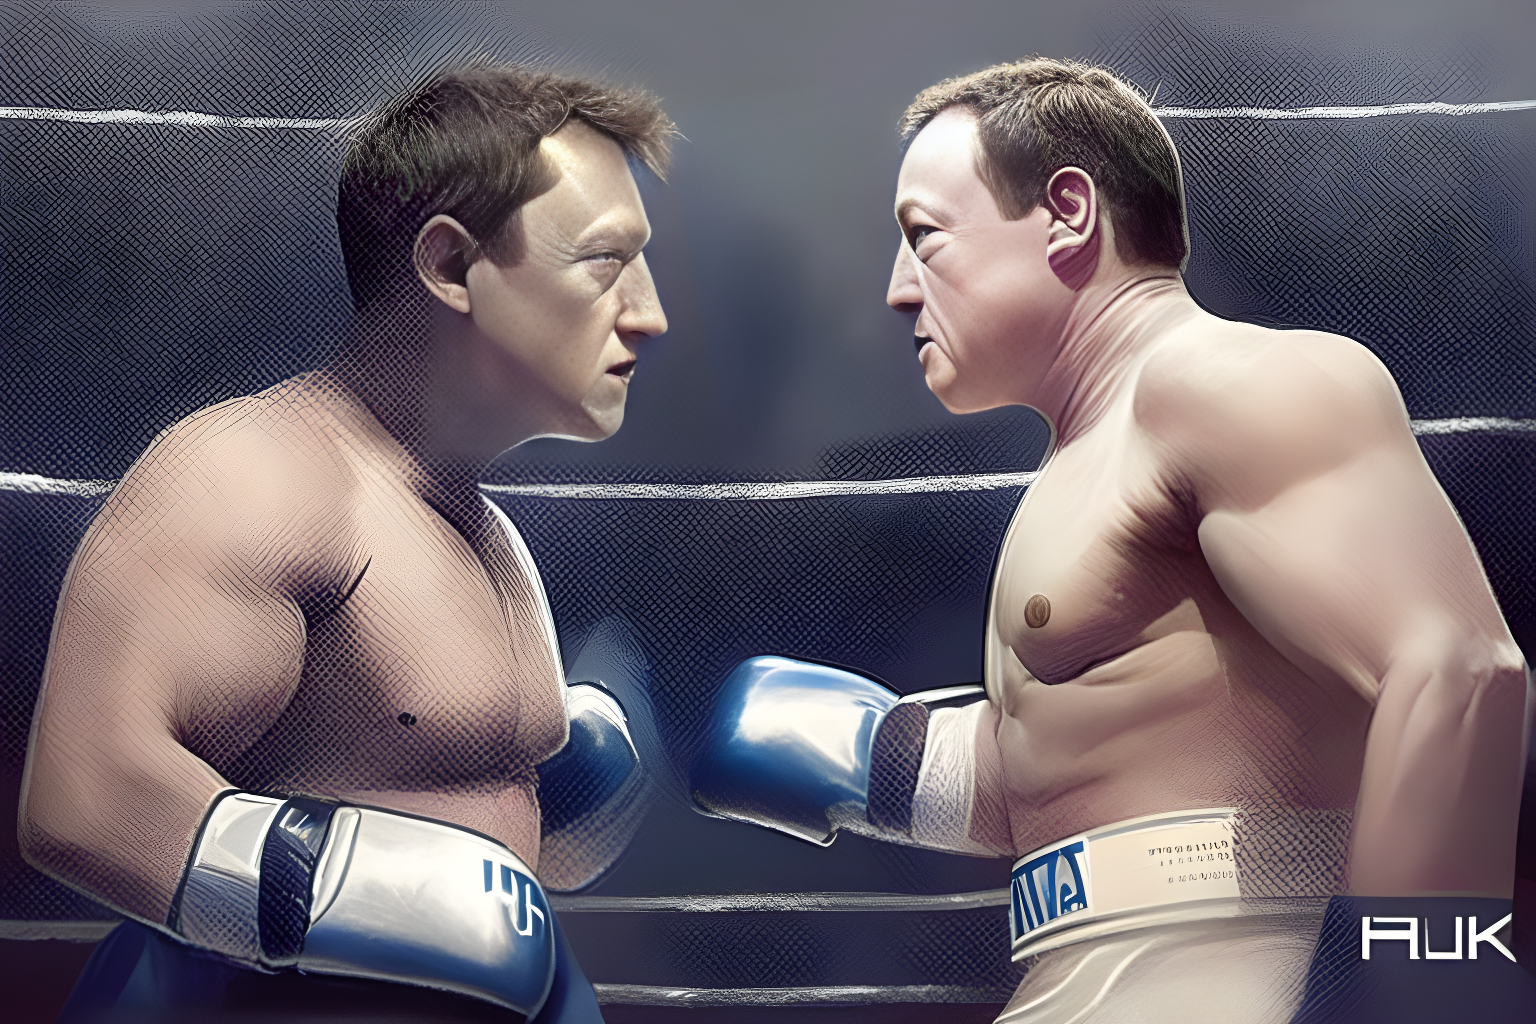 Mark Zuckerberg, Elon Musk, Facing Each Other, Boxing Match, Wrestling Ring